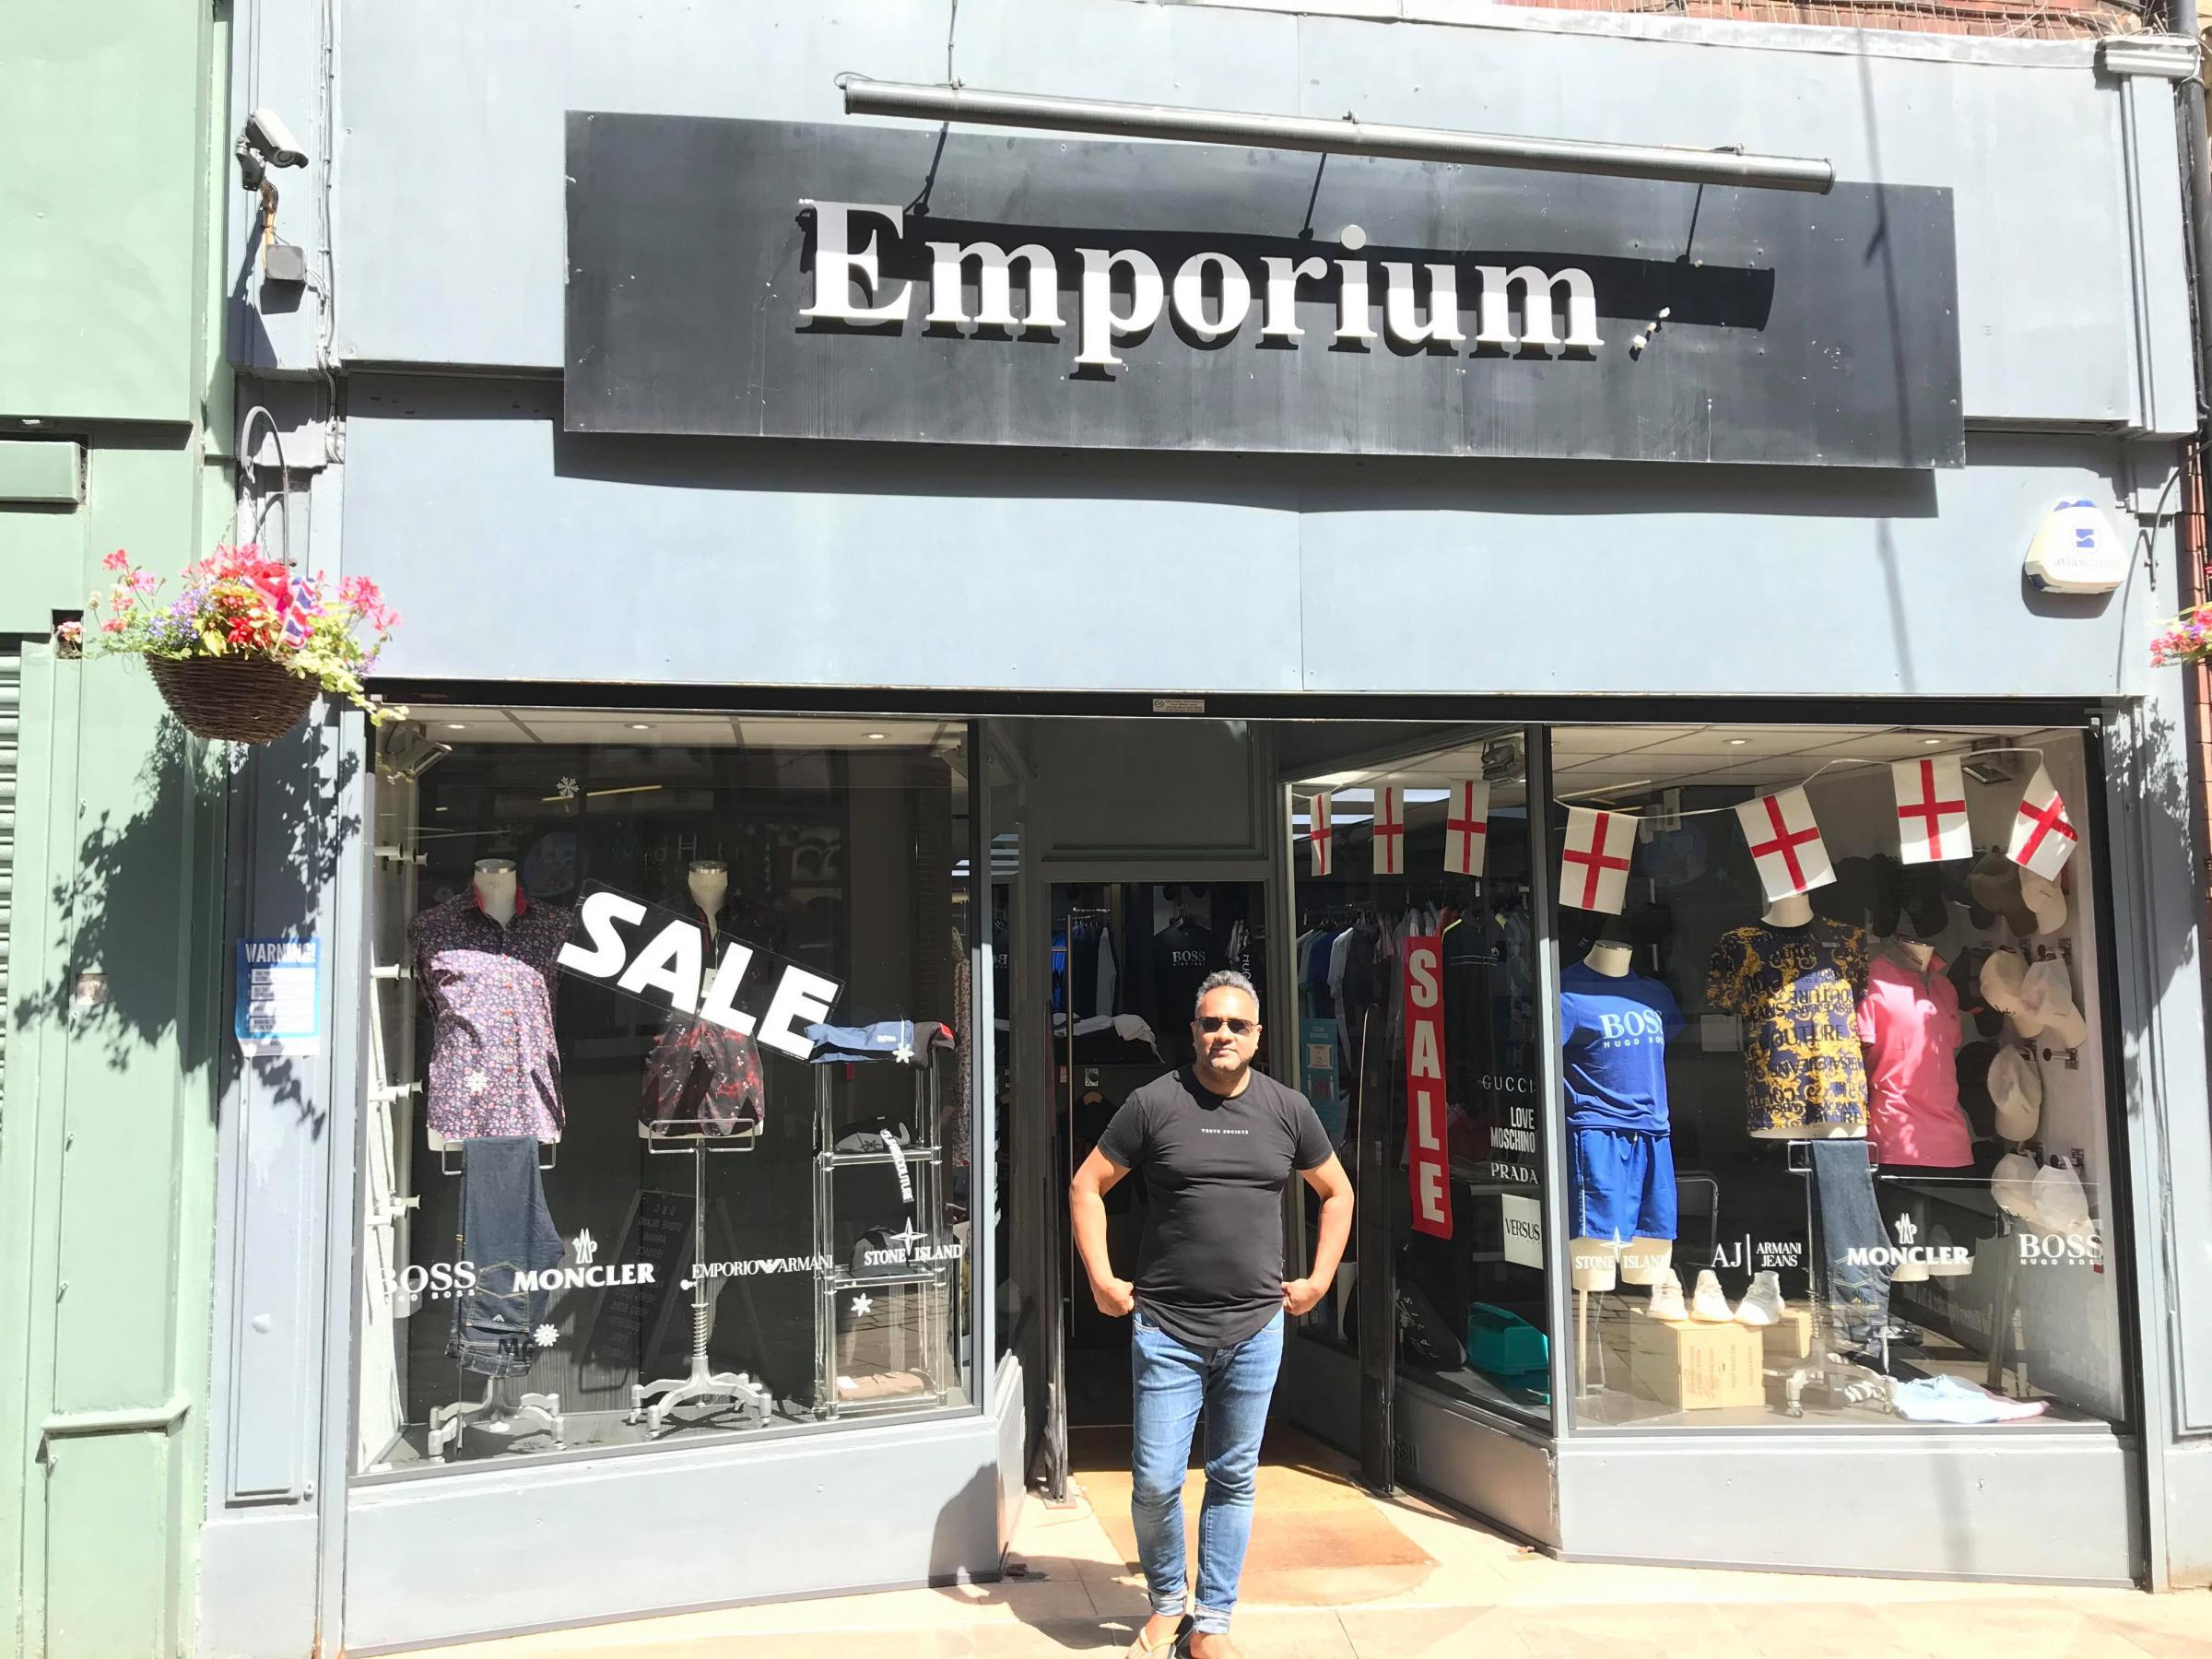 Yaz, owner of Emporium clothes shop